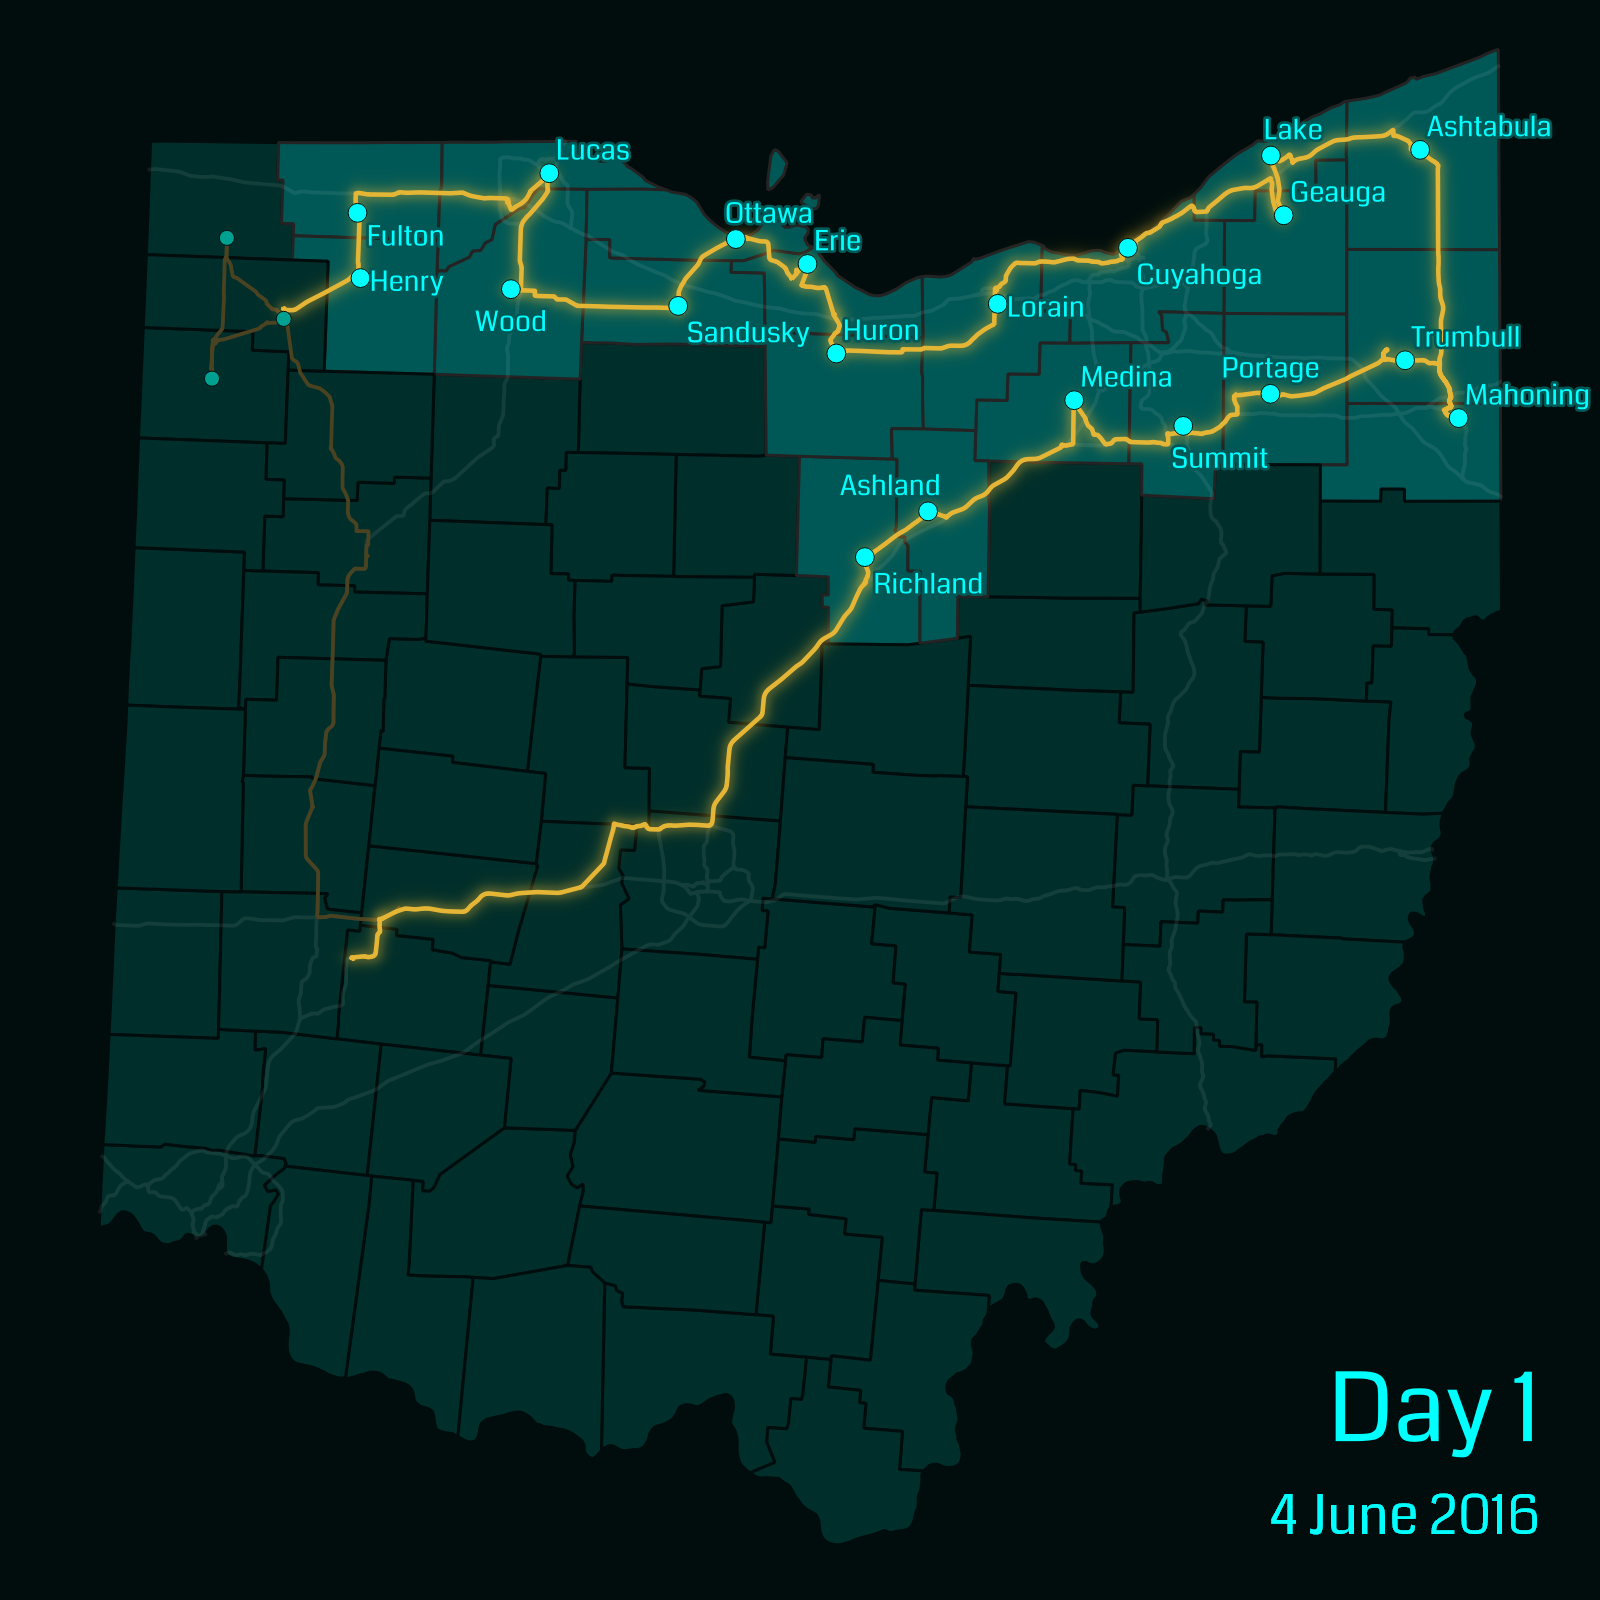 Ohio map showing a route through the following counties: Henry, Fulton, Lucas, Wood, Sandusky, Ottawa, Erie, Huron, Lorain, Cuyahoga, Geauga, Lake, Ashtabula, Mahoning, Trumbull, Portage, Summit, Medina, Ashland, Richland.